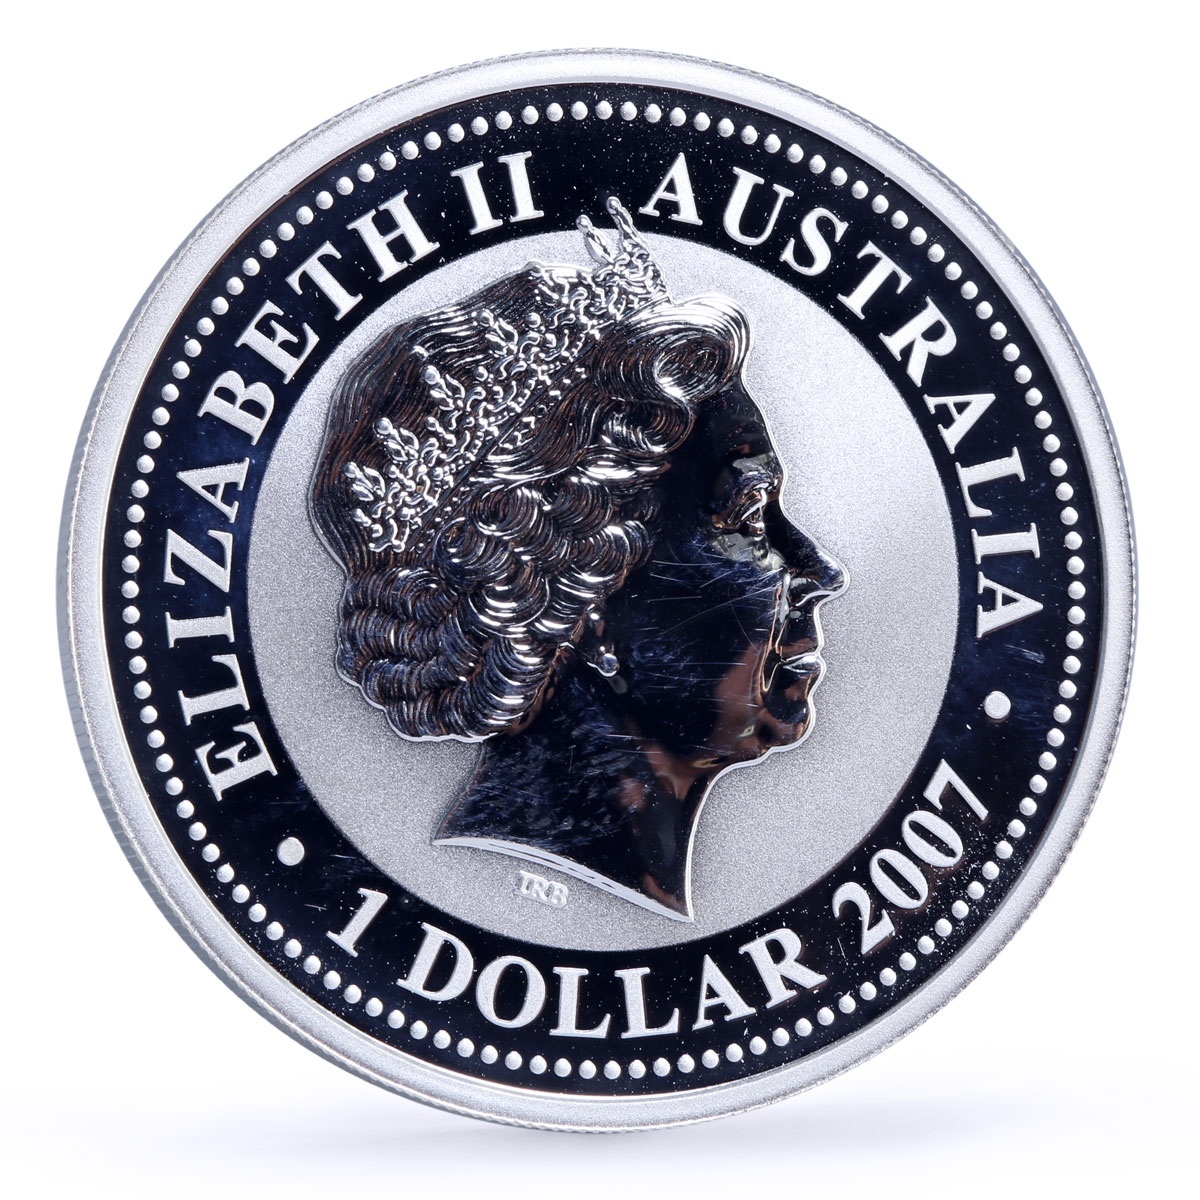 Australia 1 dollar Lunar Calendar series I Year of the Mouse silver coin 2008